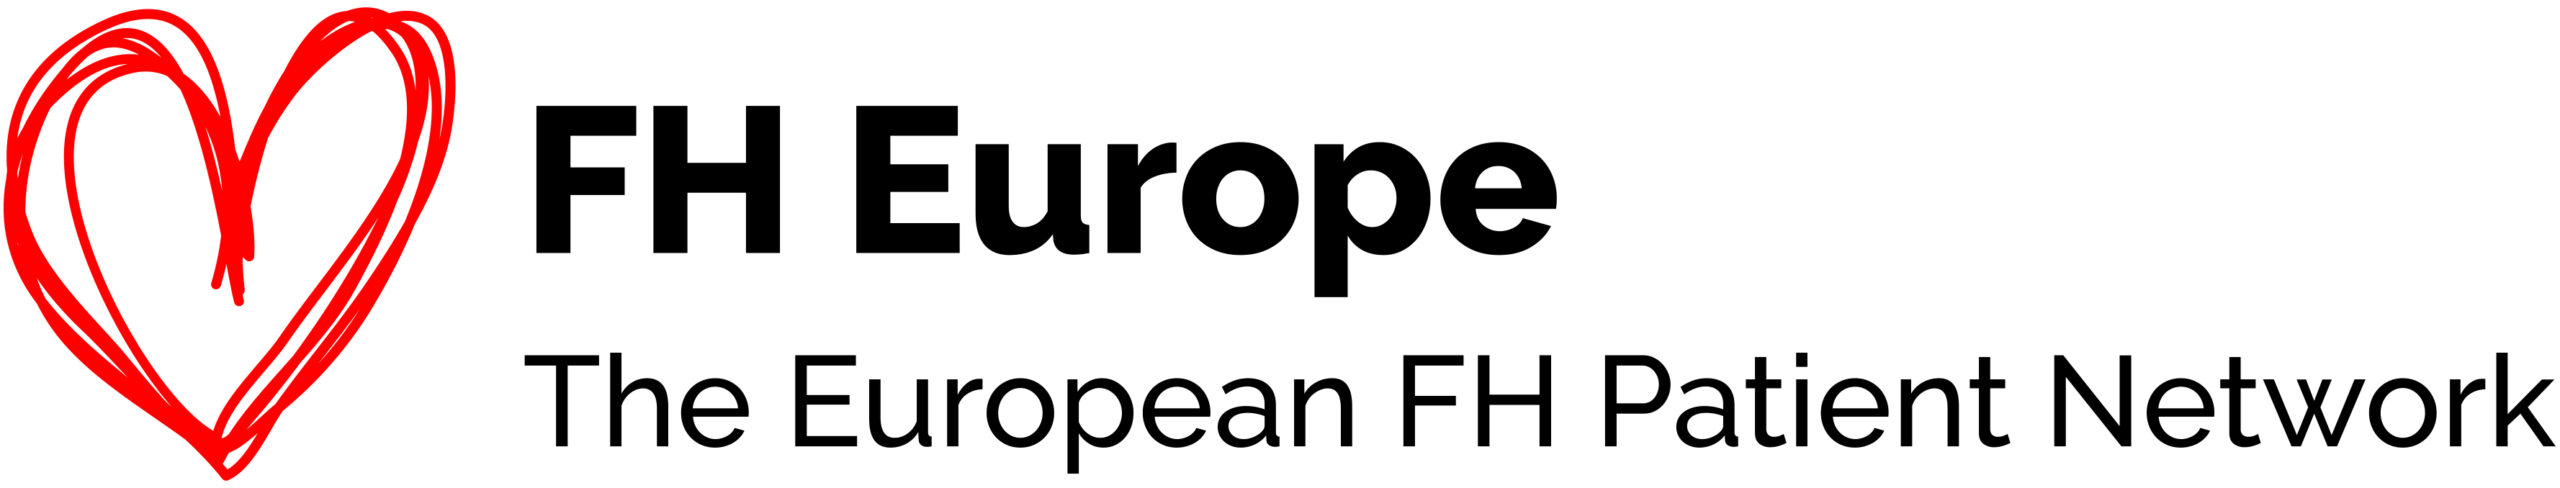 FH-Europe_logo_CMYK